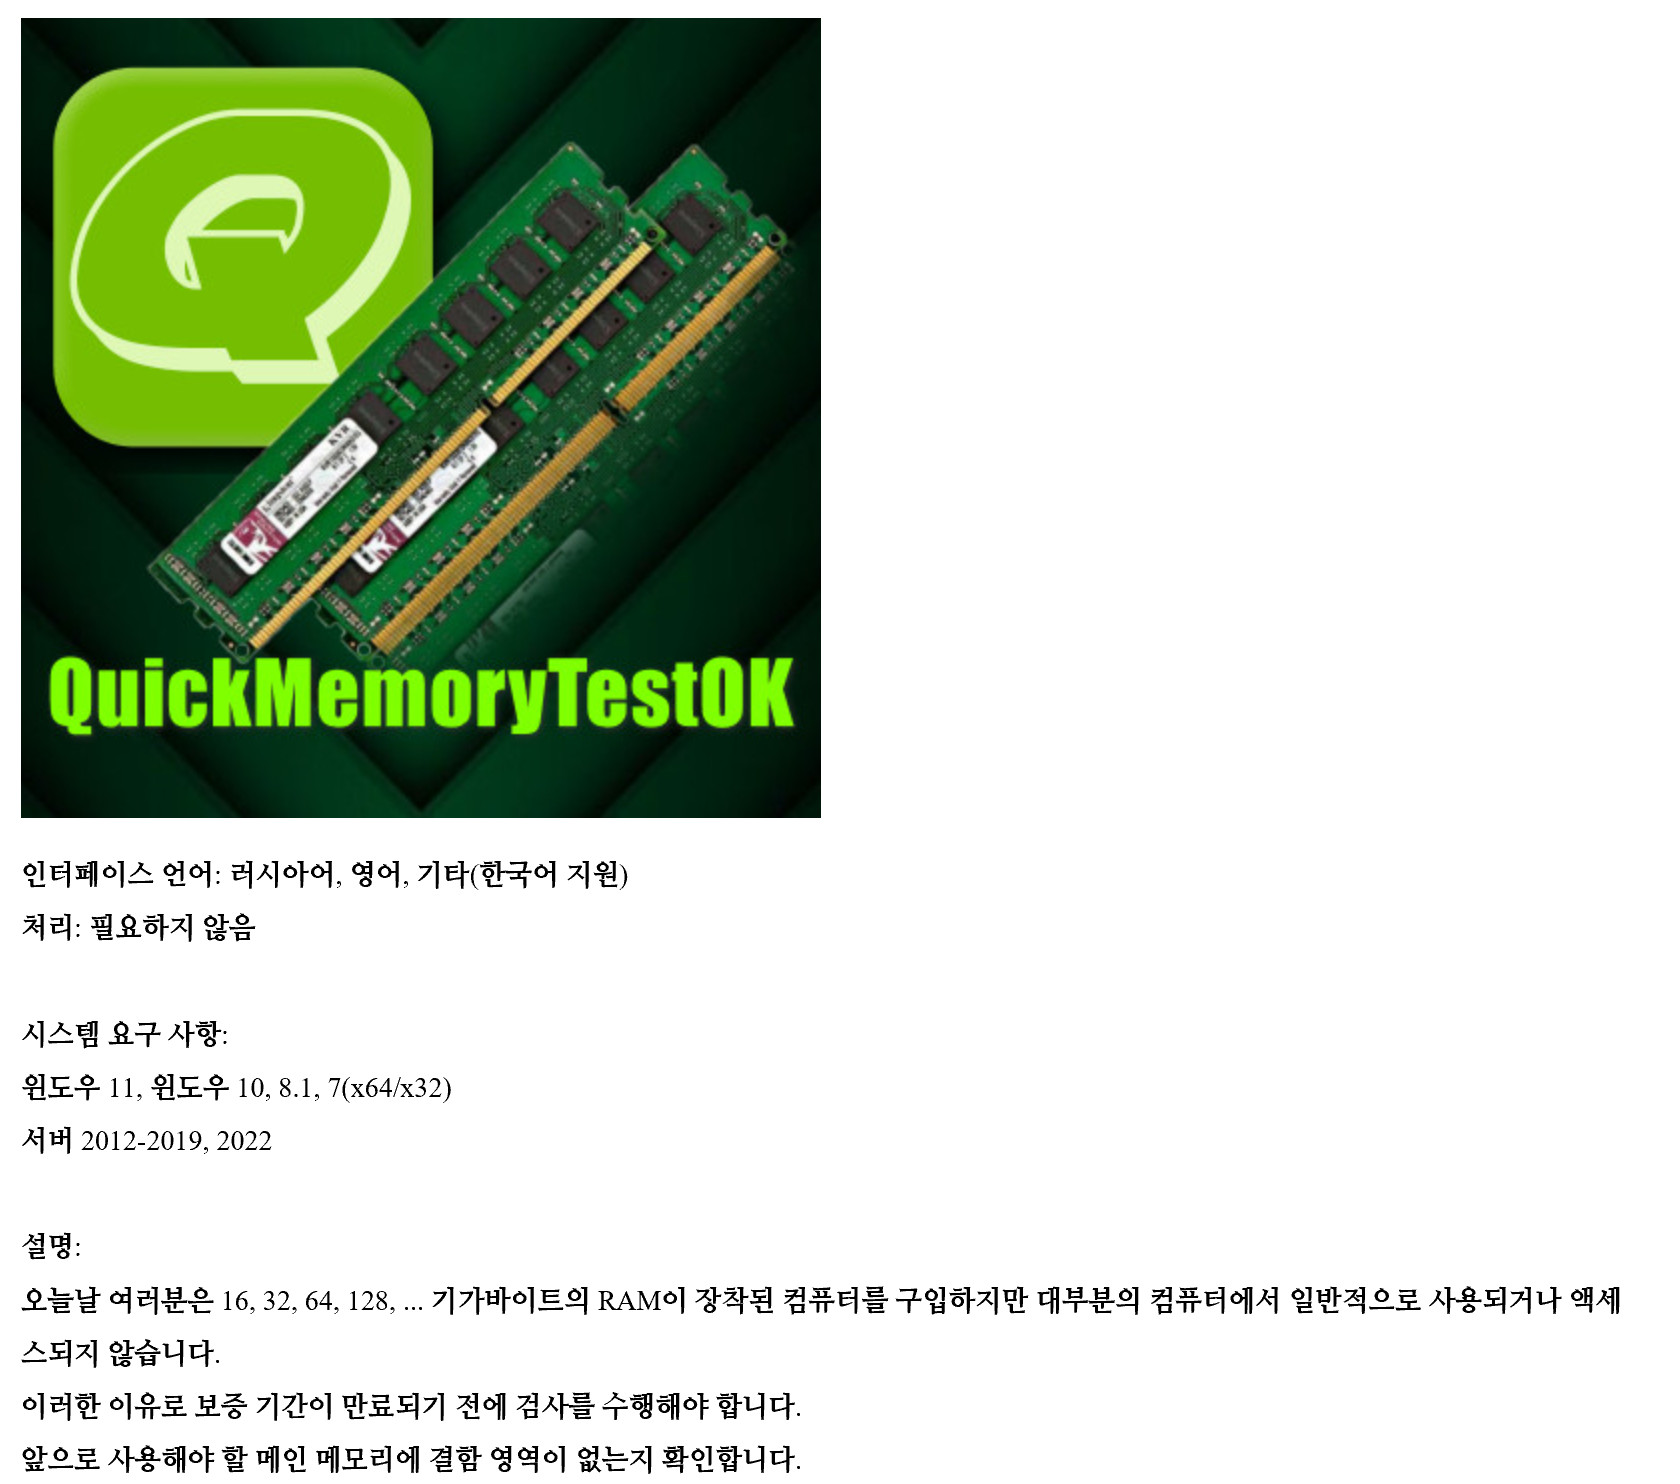 QuickMemoryTestOK 4.61 download the new version for mac